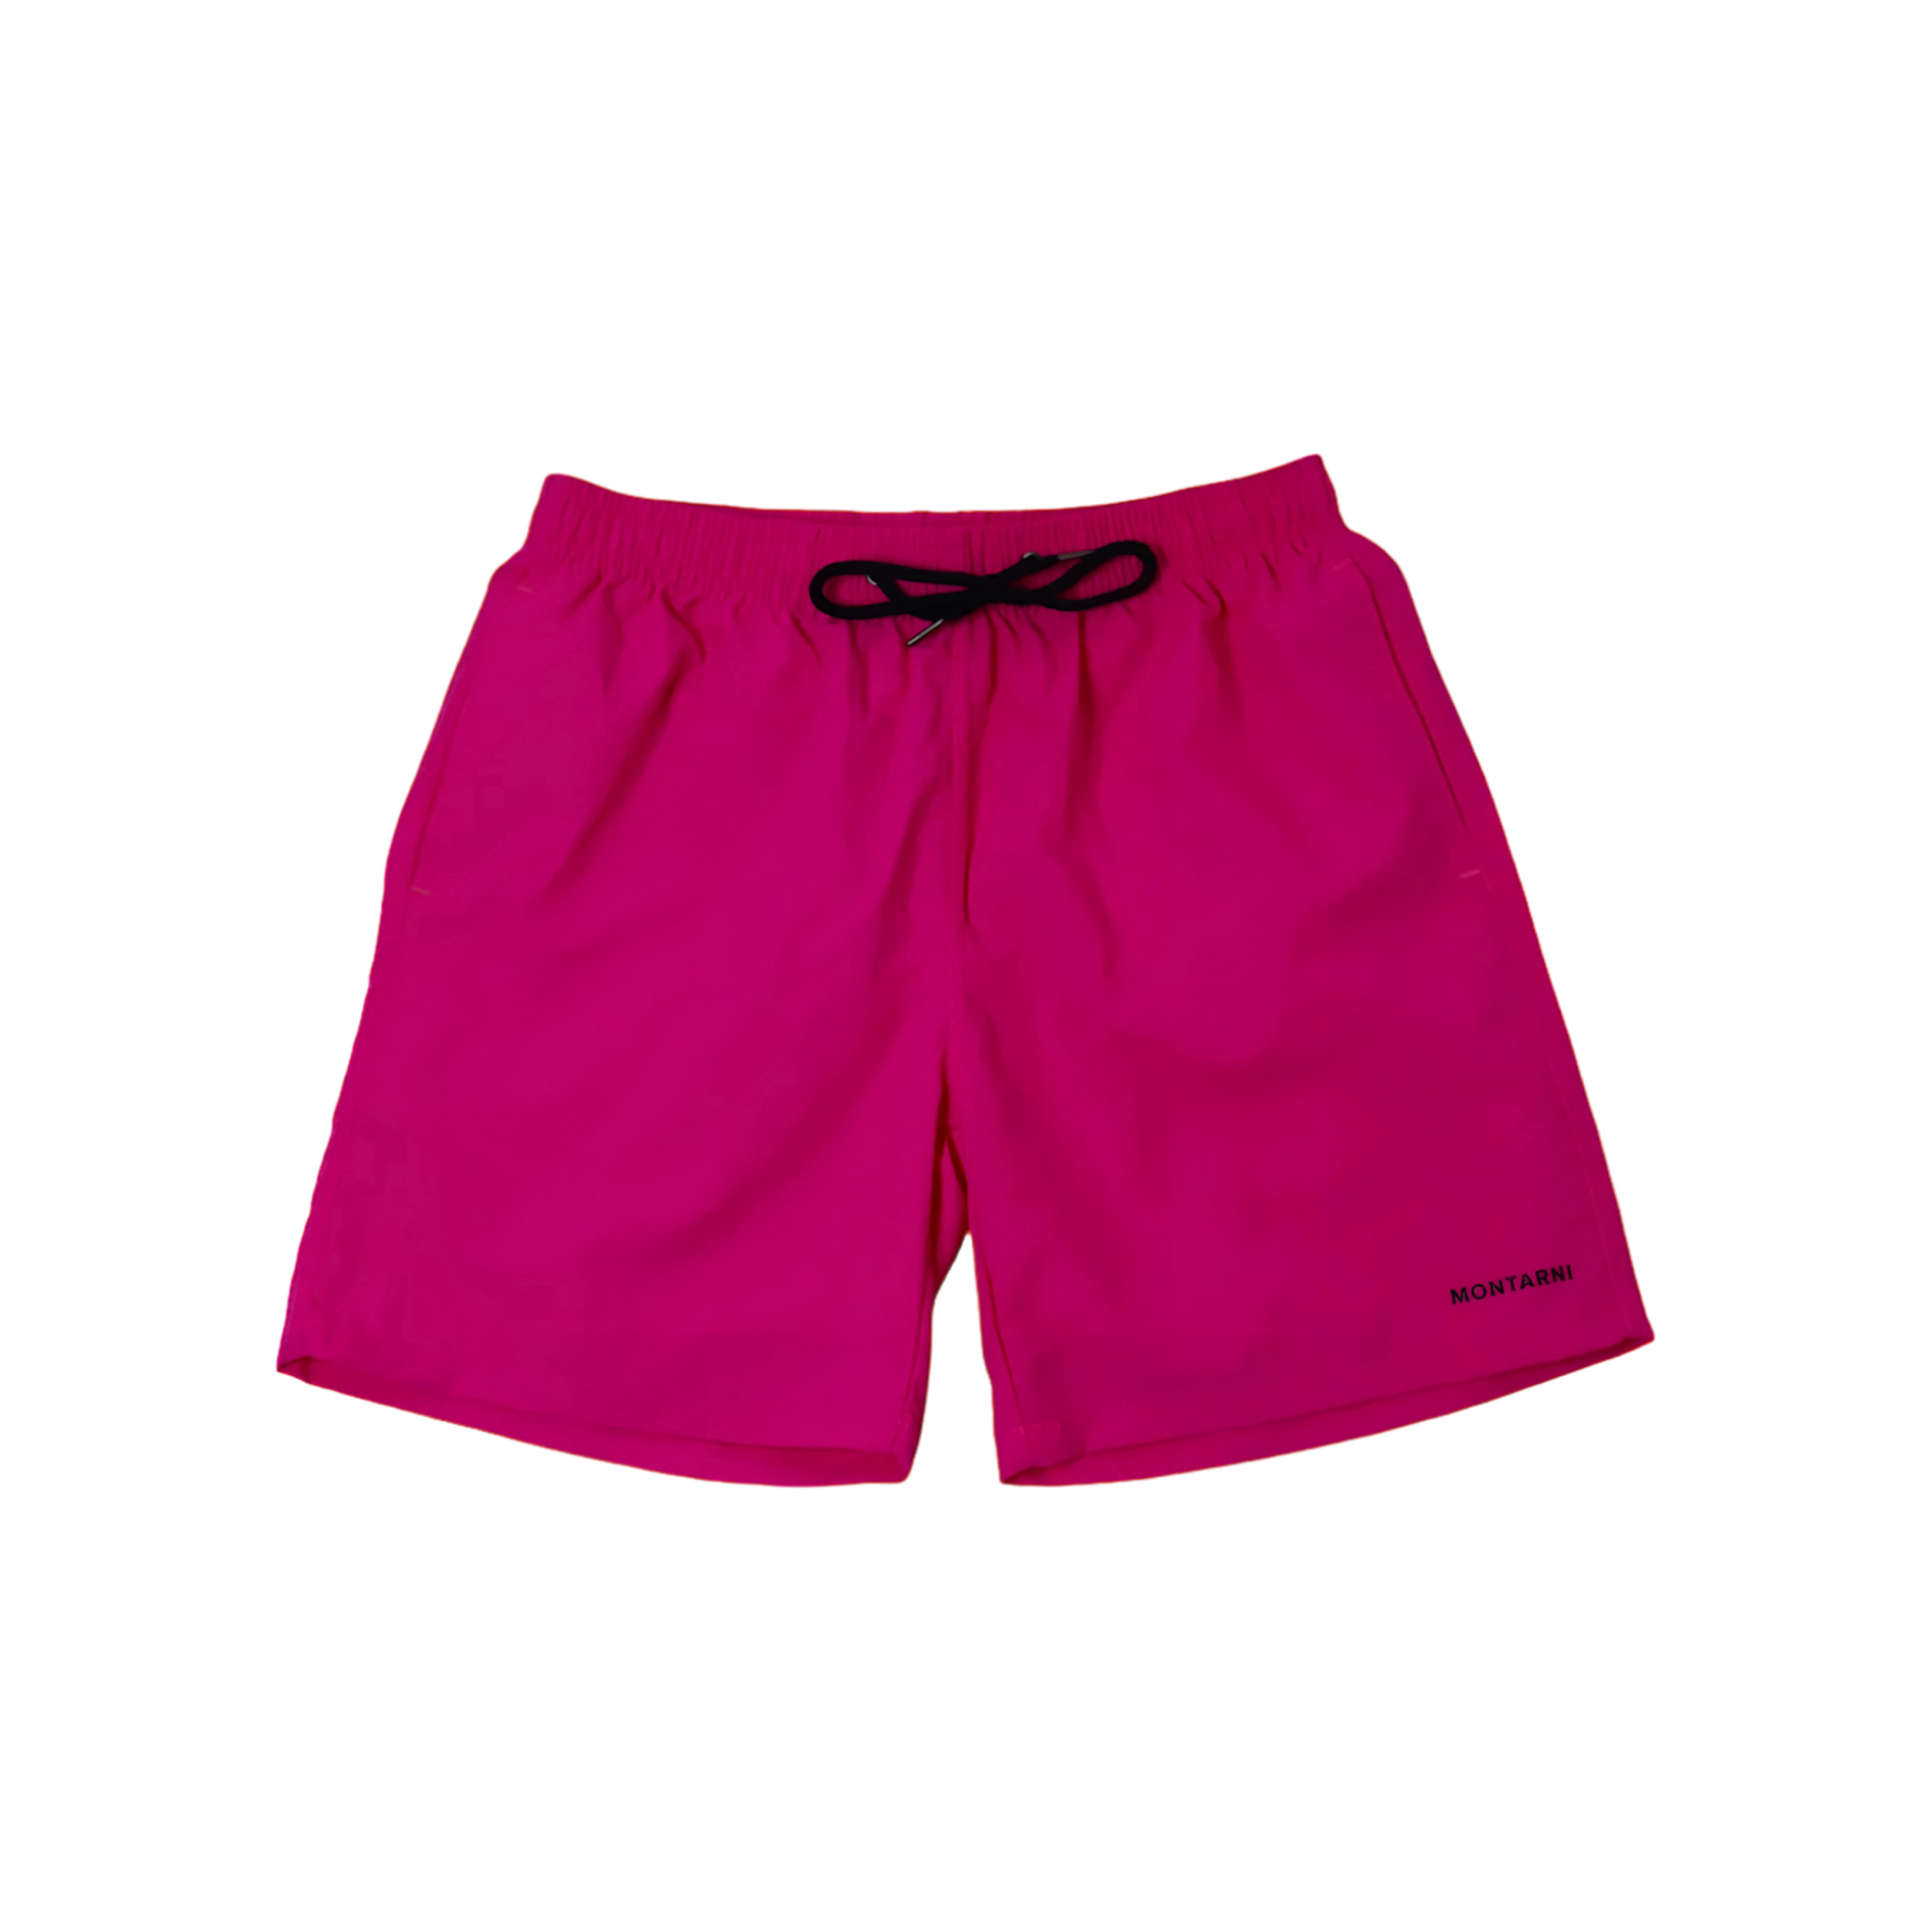 MONTARNI - Pink Beach Shorts